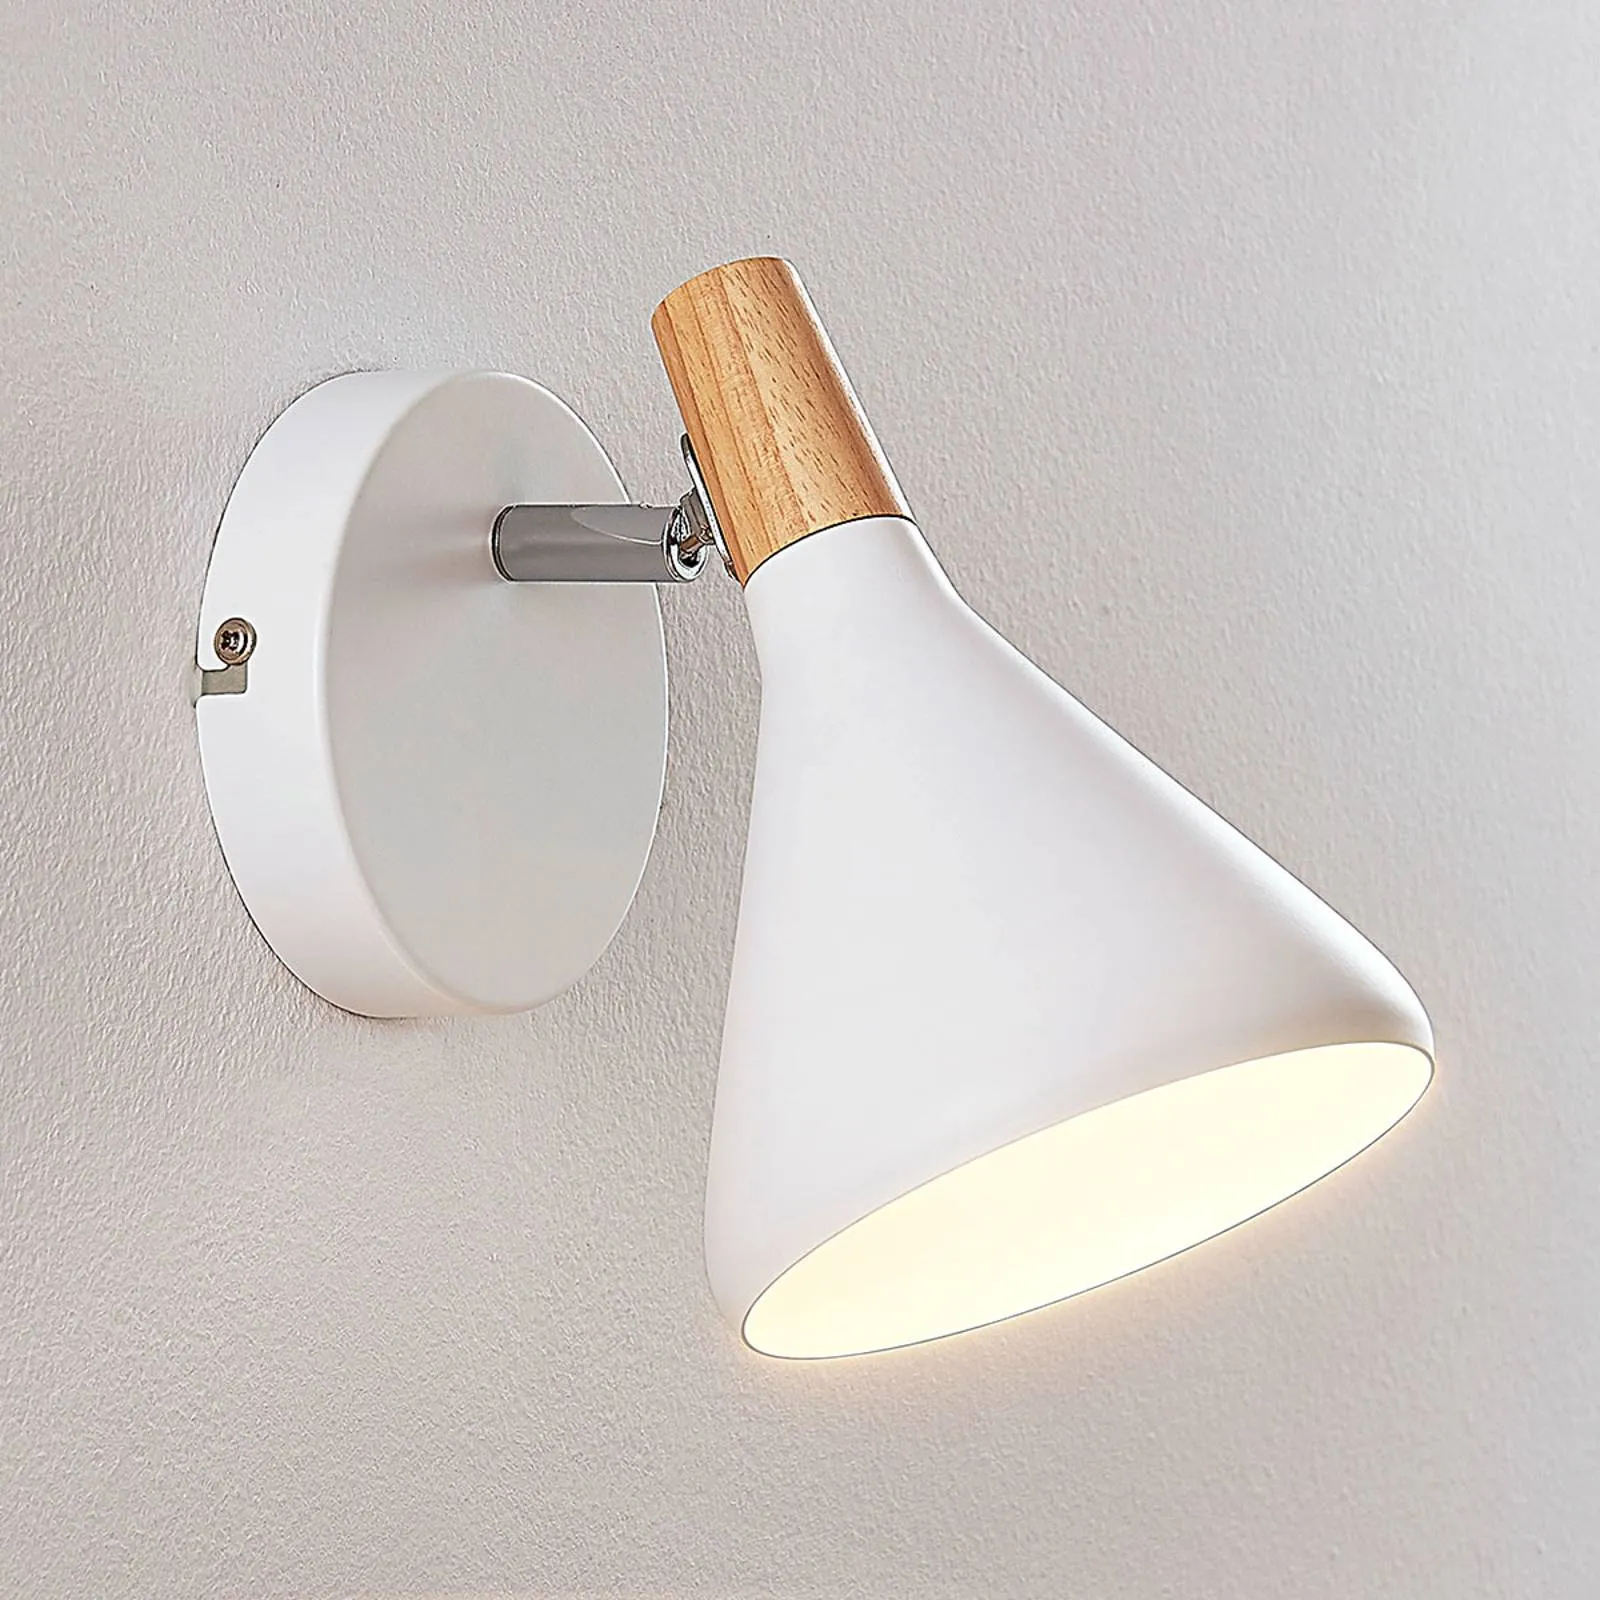 Aesthetic LED wall light Arina in white